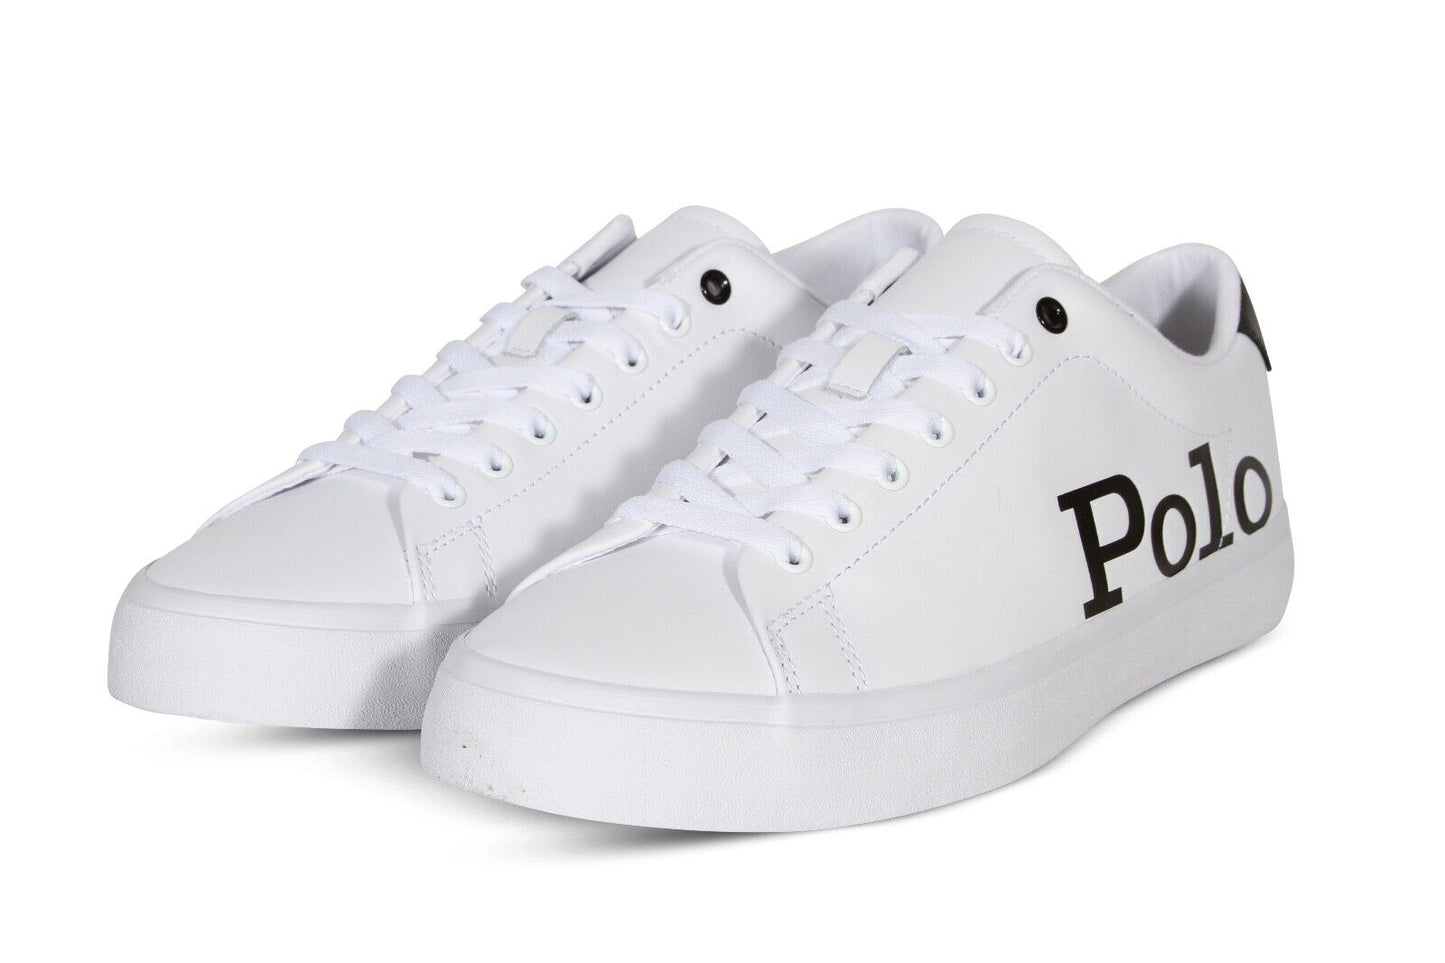 Polo Ralph Lauren Longwood Logo Men’s Sneakers in White and Black 816862547001